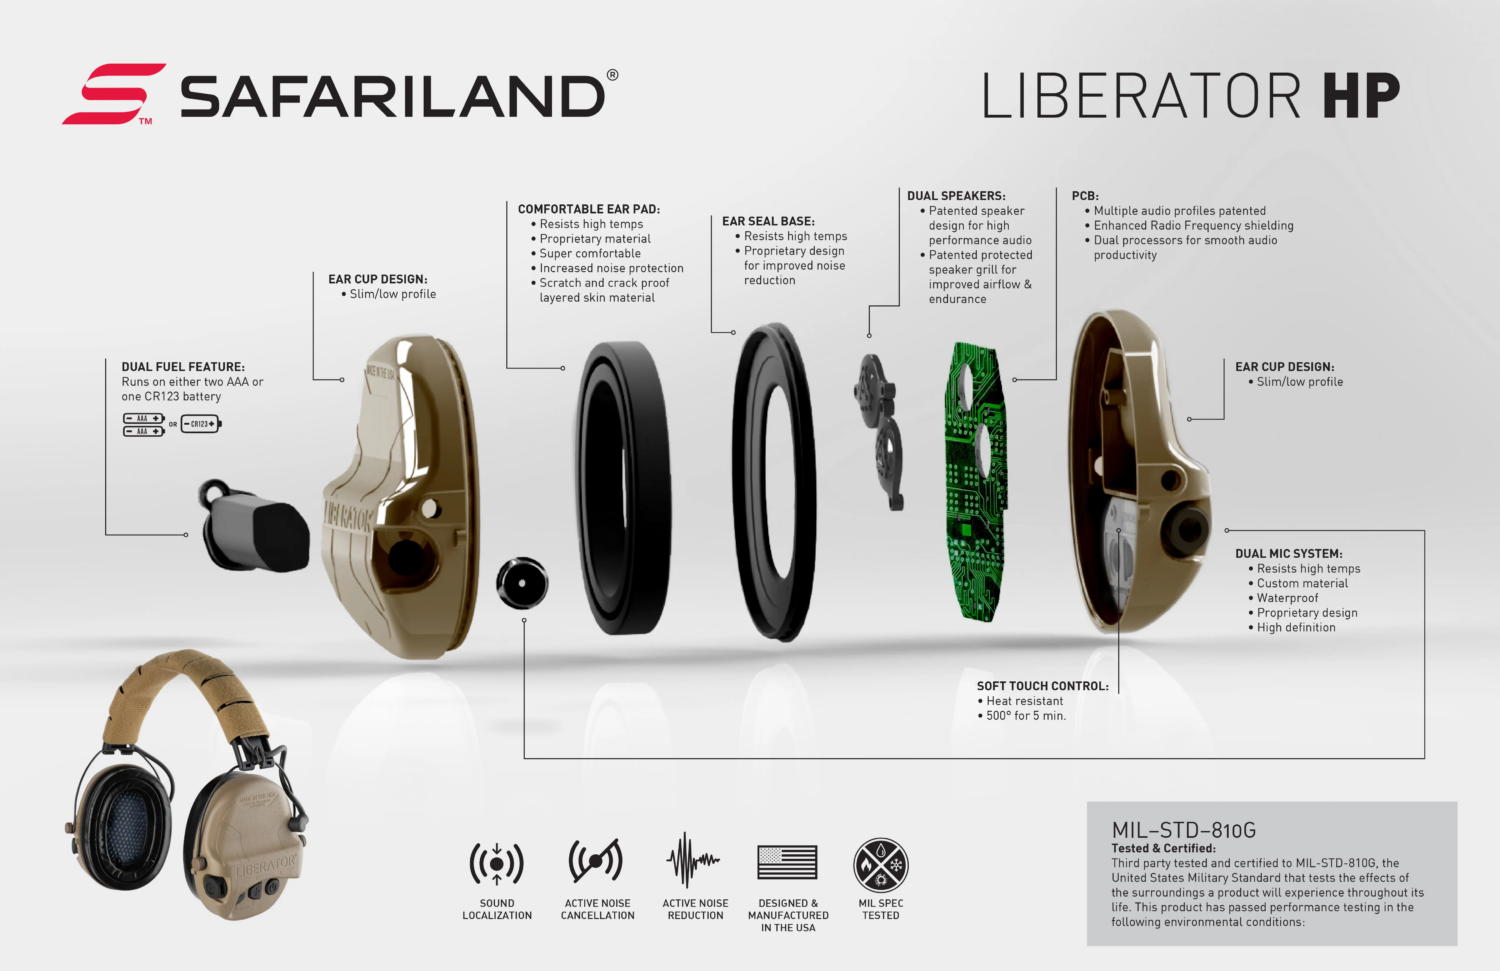 Noveske Rifleworks & Safariland Collab on Liberator HP Electronic Ear Pro